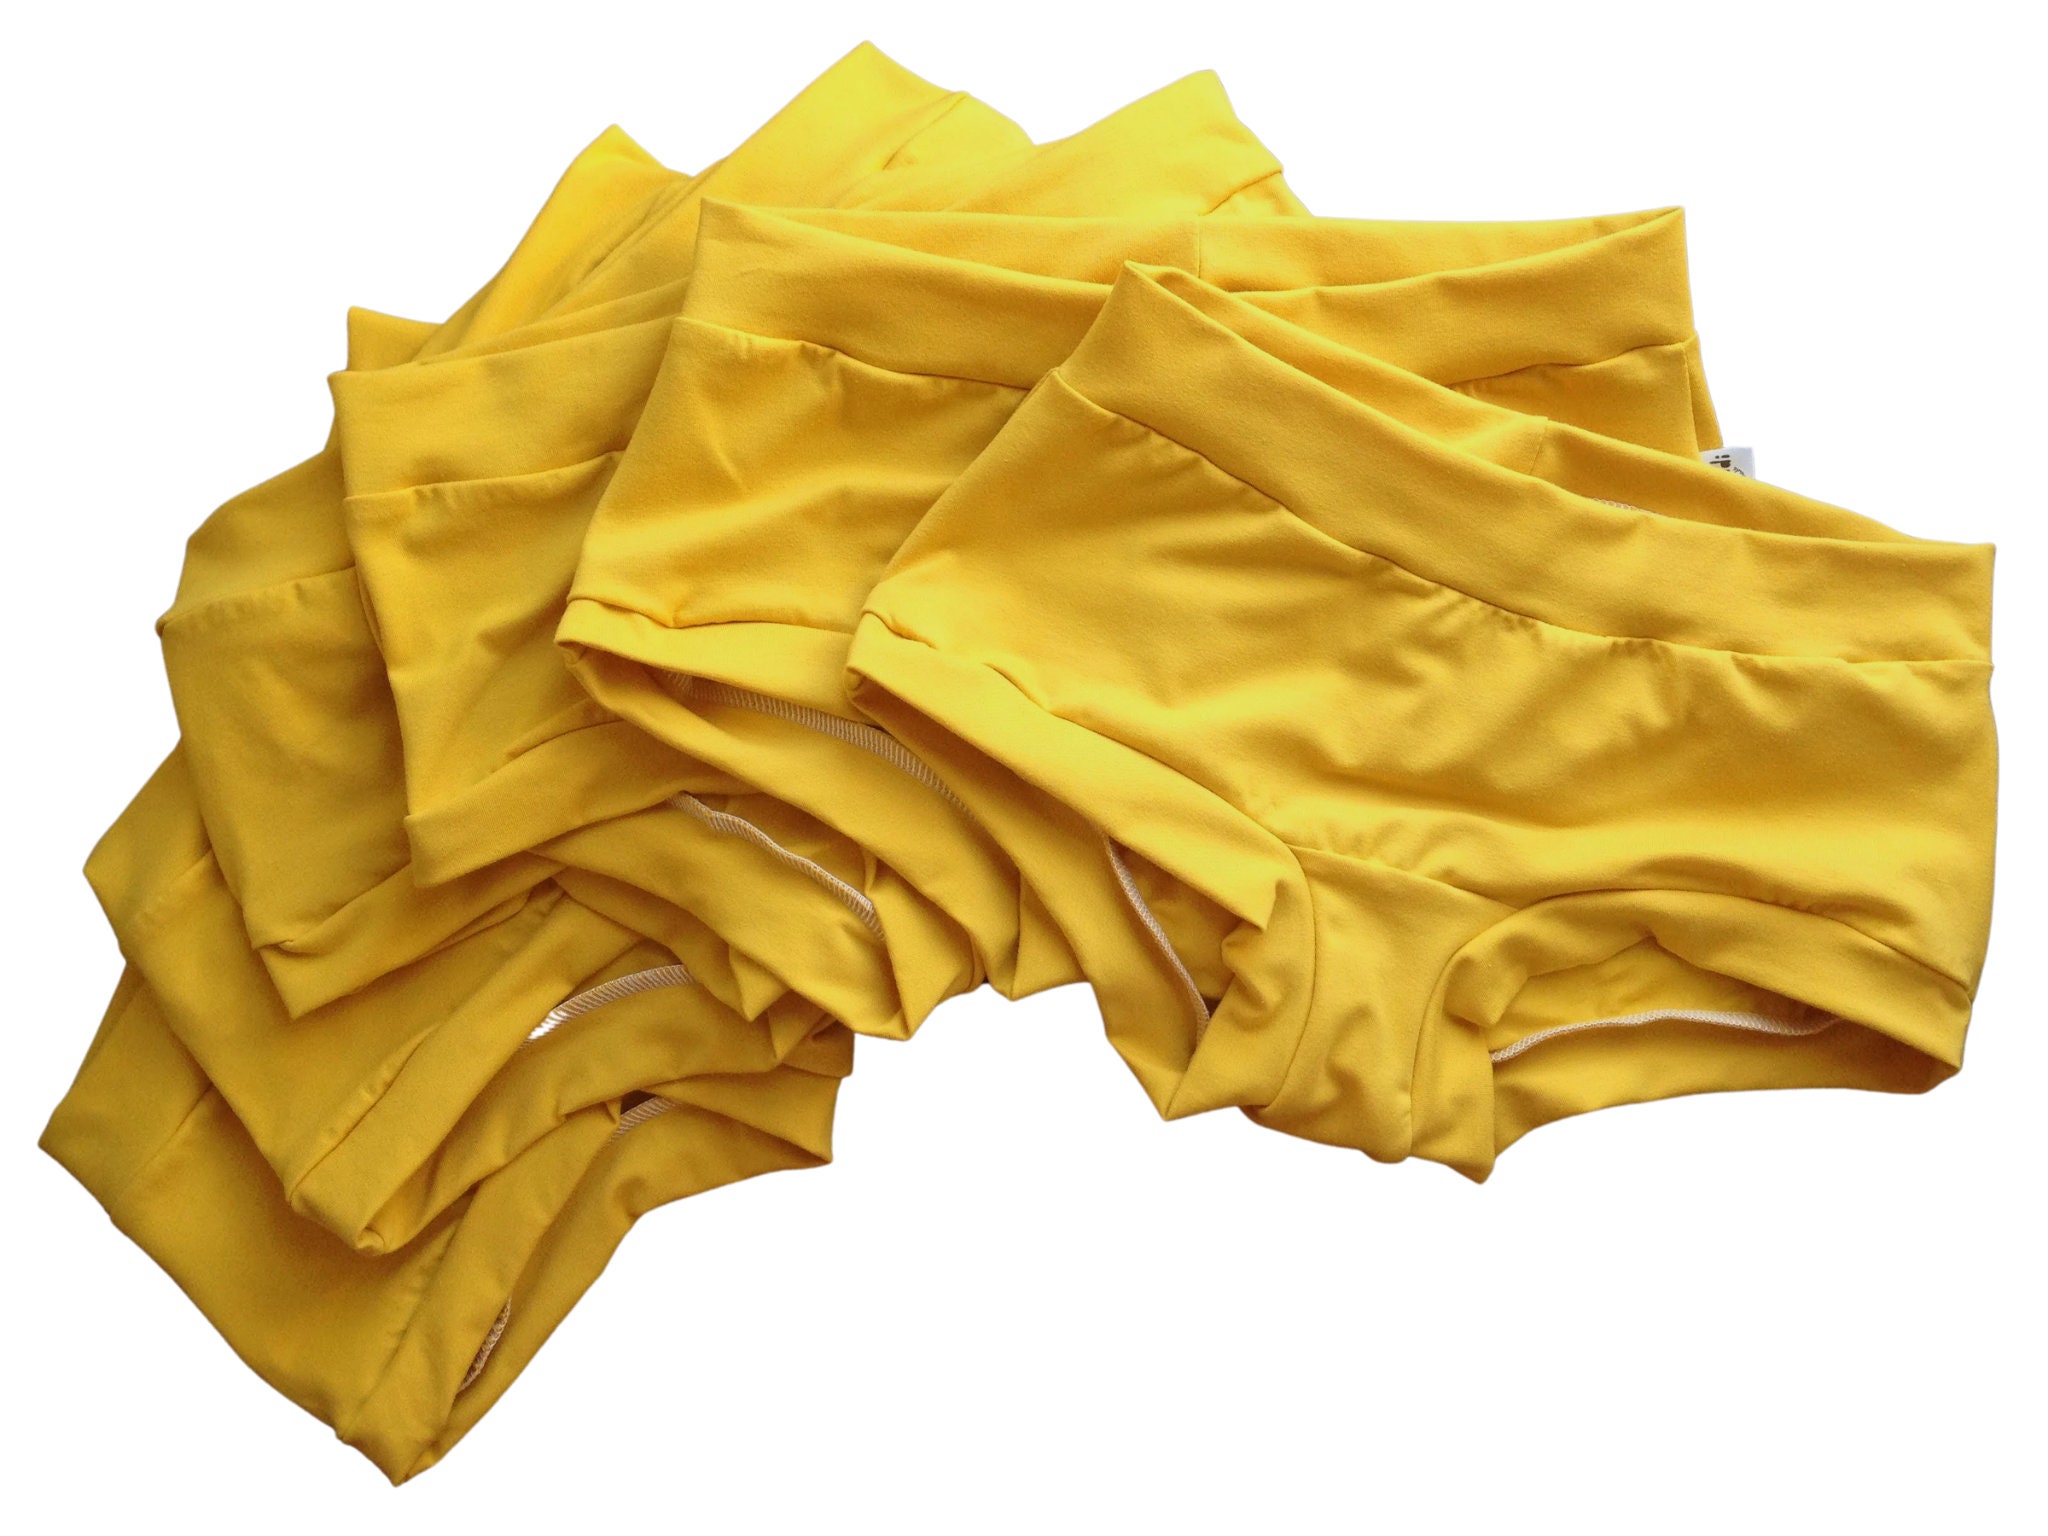 Mustard Yellow Women's Underpants, Comfortable Organic Cotton